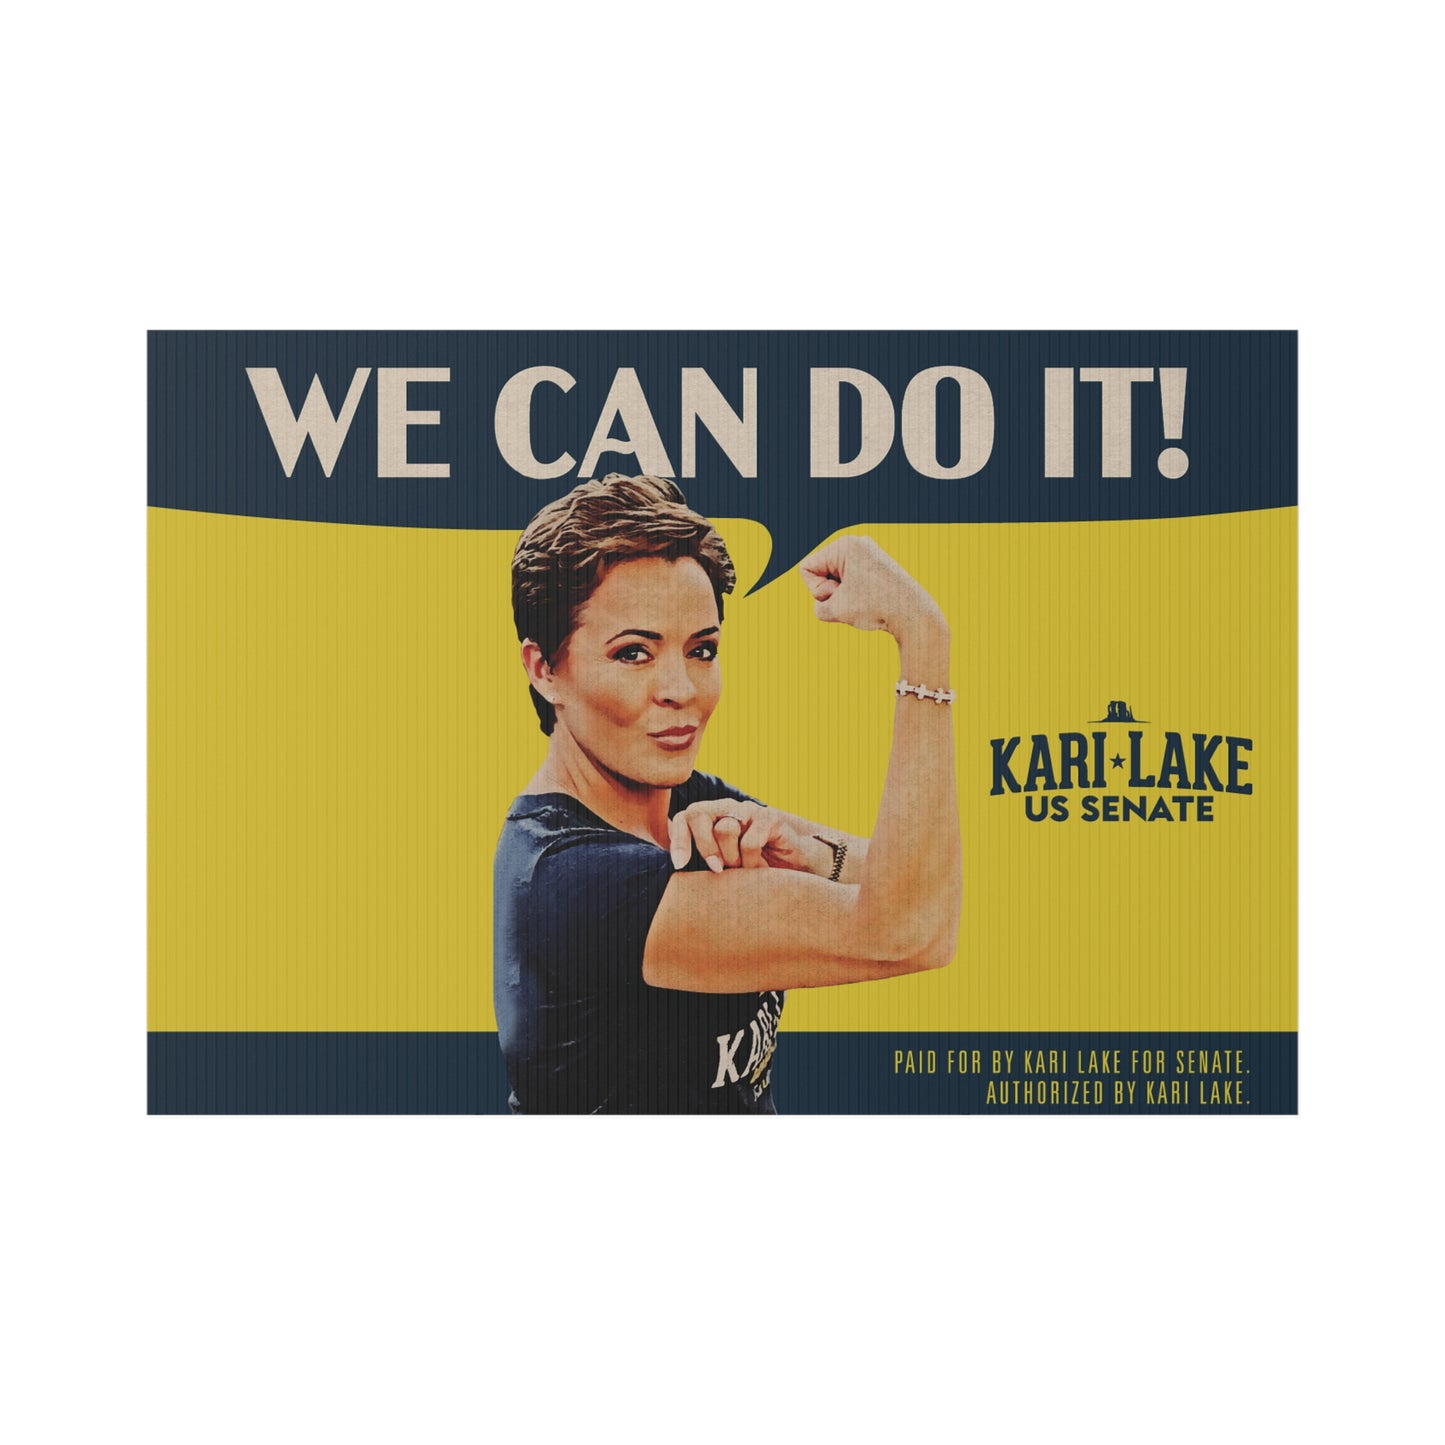 Kari Lake for Senate: "We Can Do It!" Lawn Sign